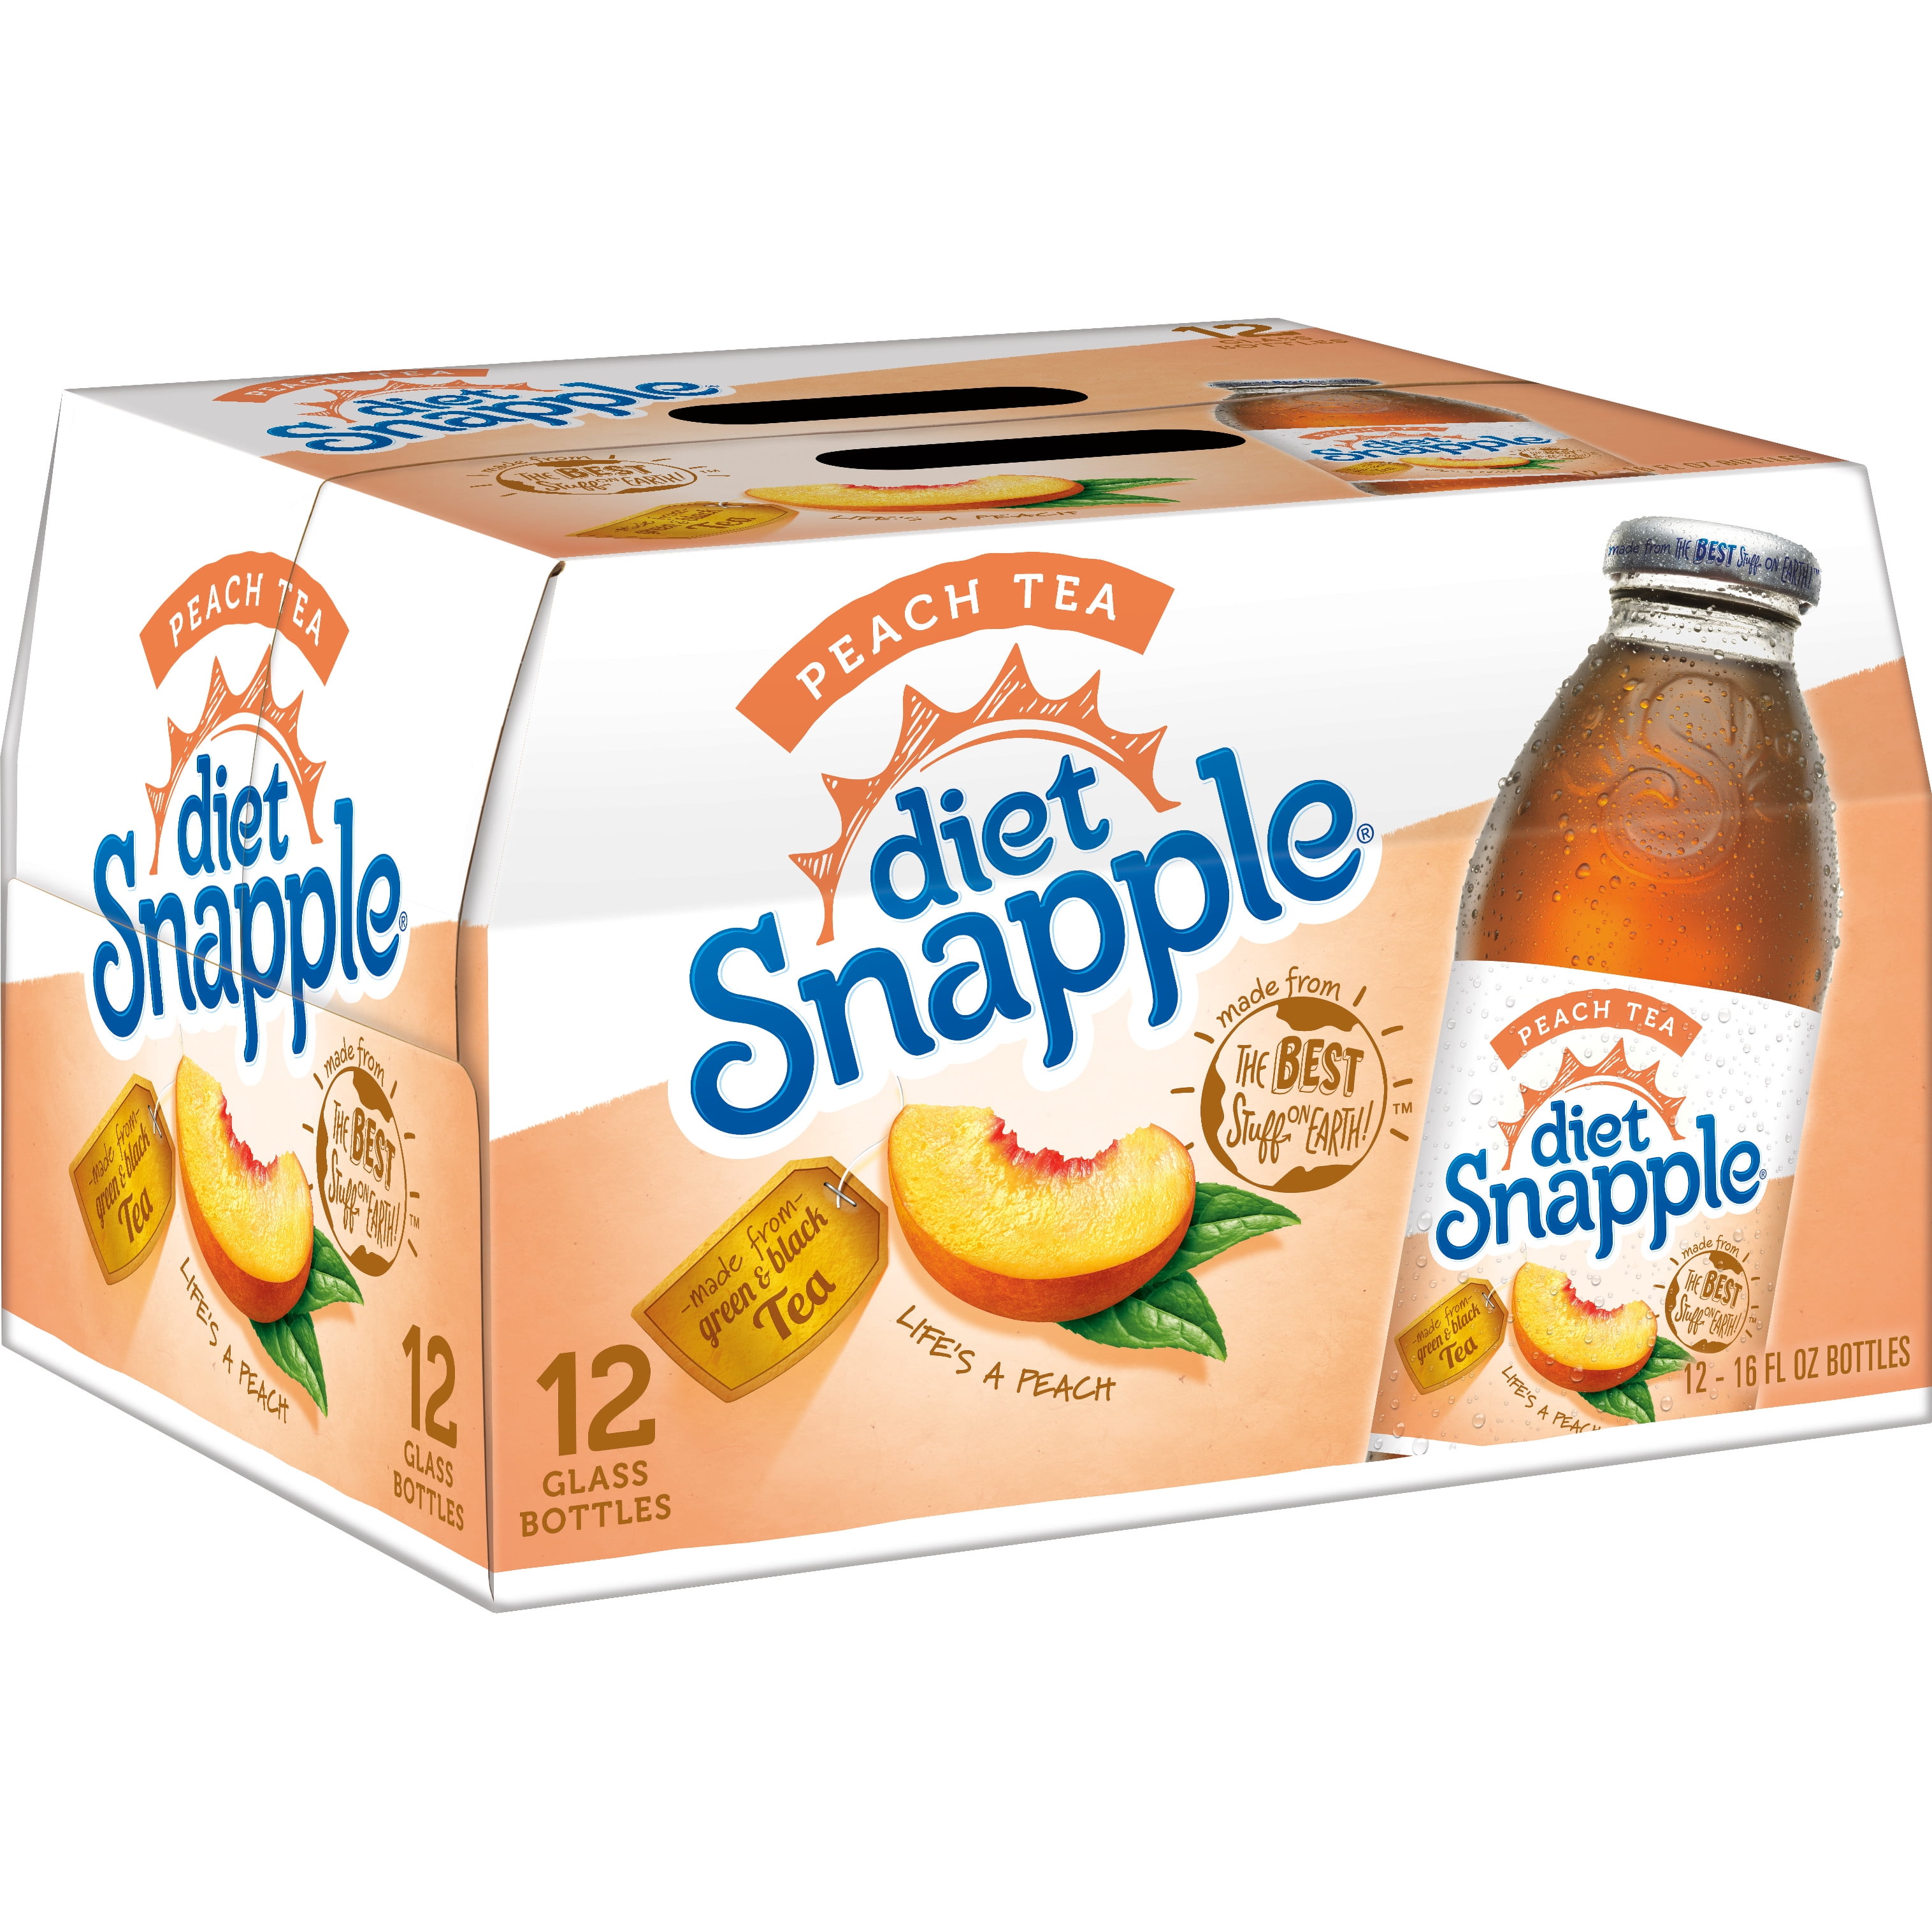 16 oz Peach Tea by Snapple at Fleet Farm